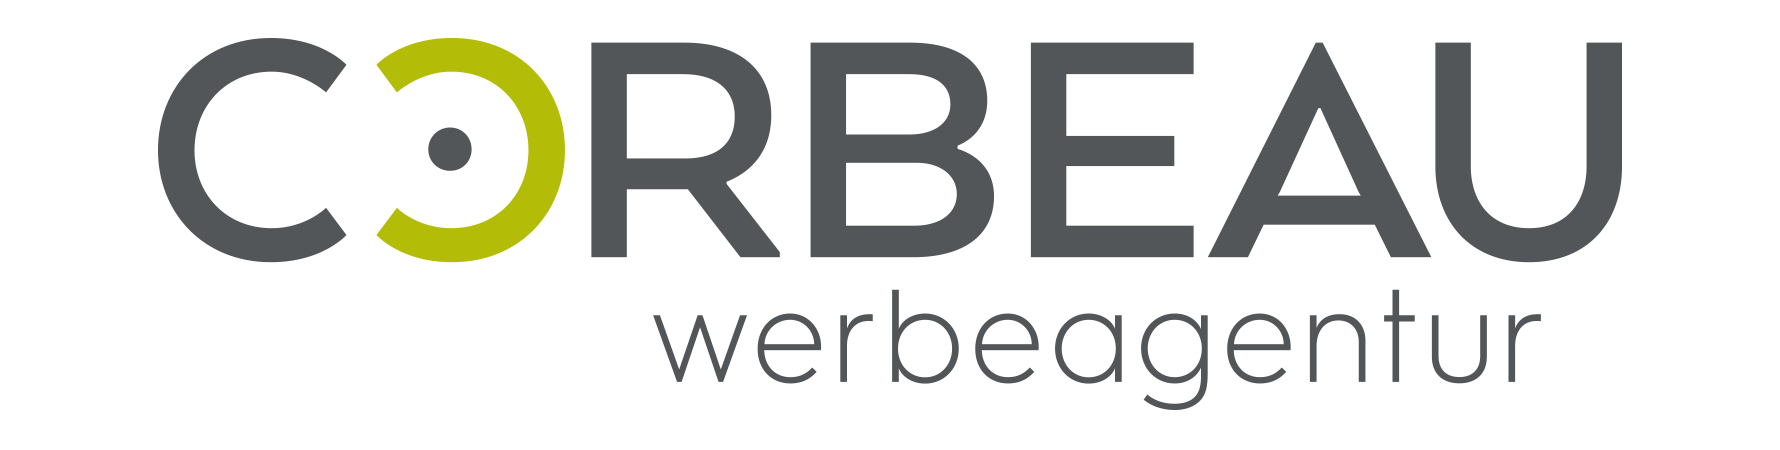 logo werbeagentur corbeau